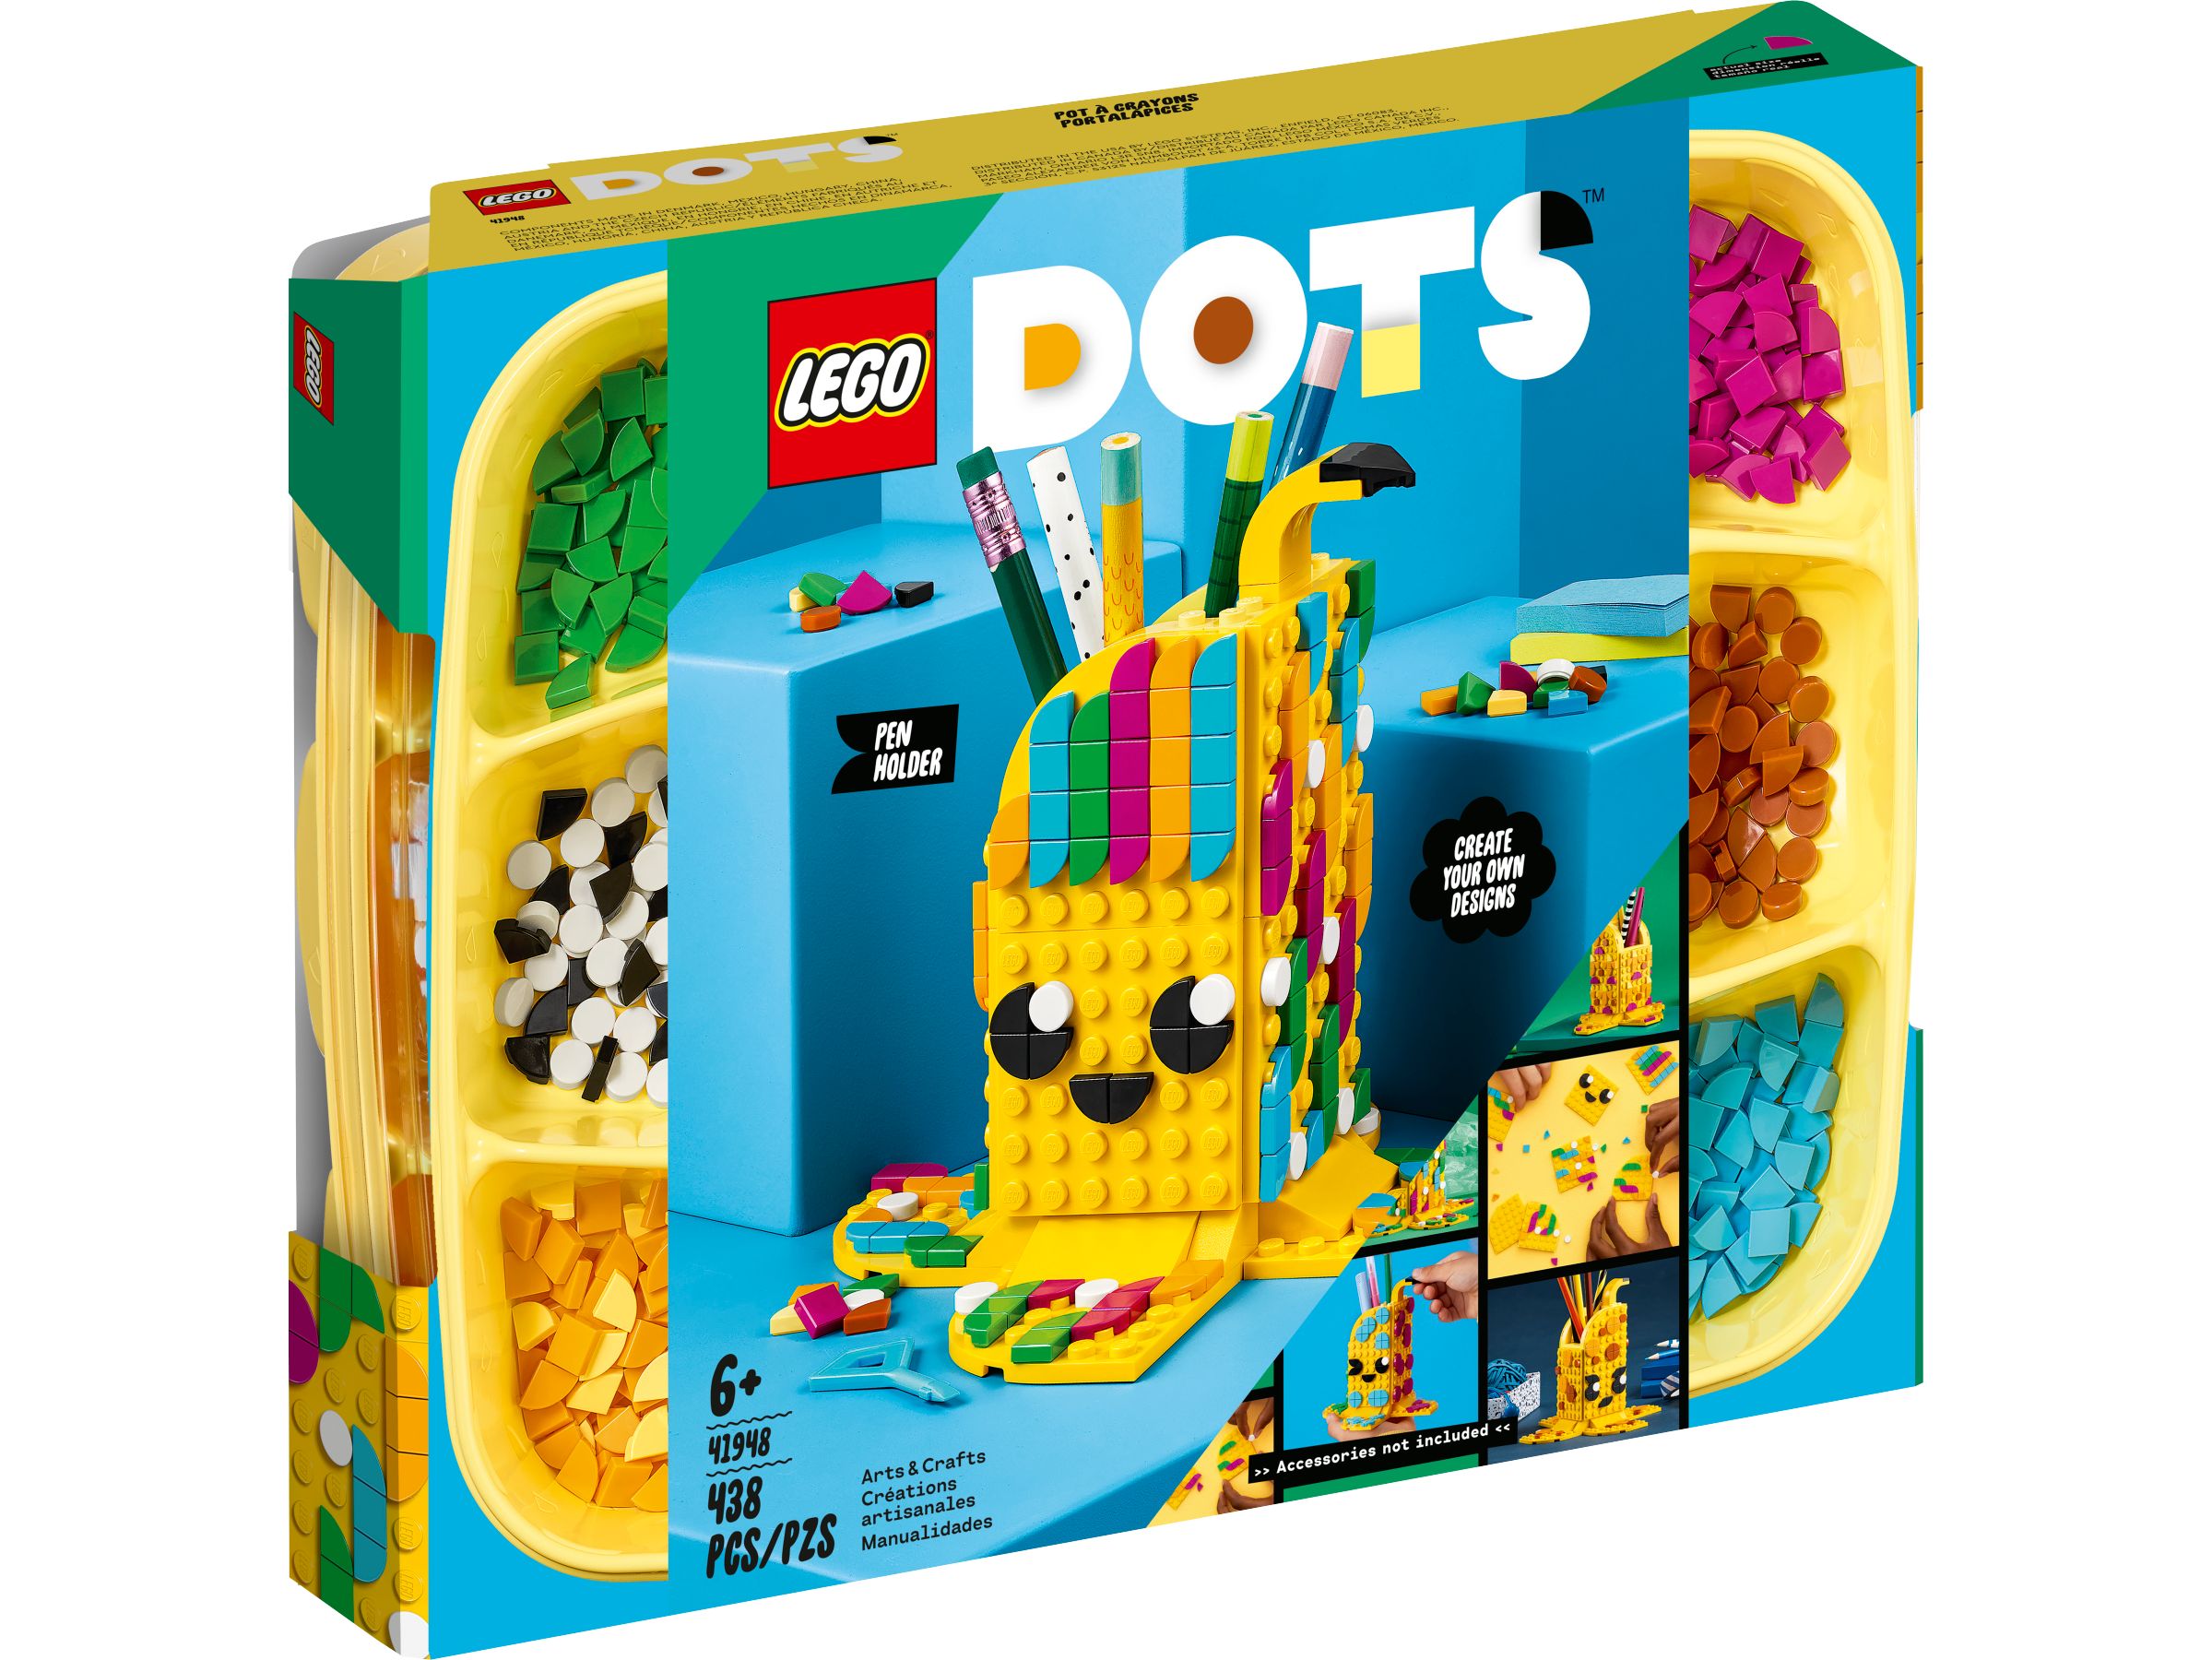 LEGO Dots 41948 Bananen Stiftehalter LEGO_41948_alt1.jpg